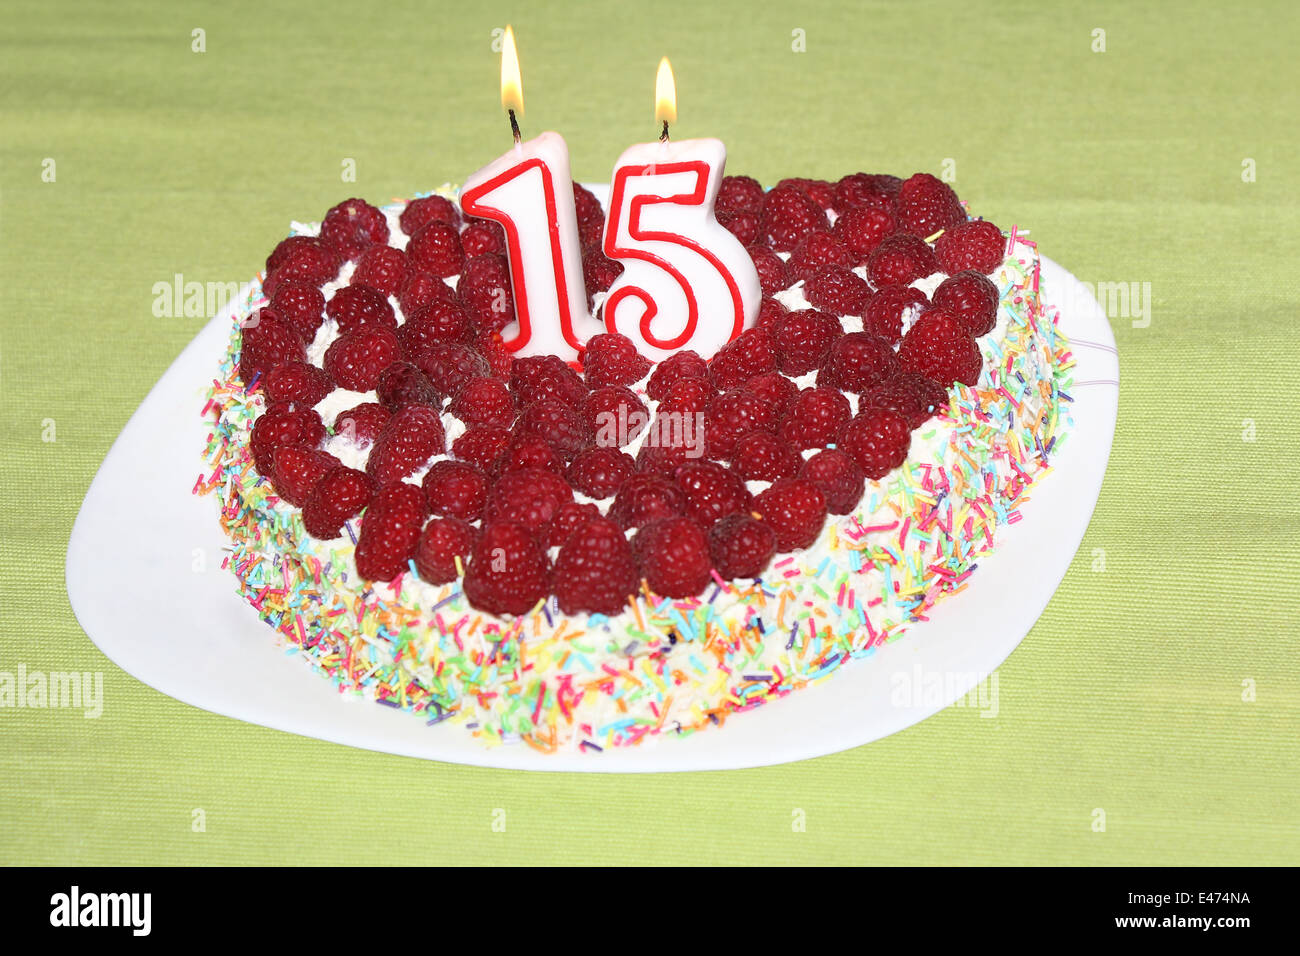 Burning birthday candles number 15 on raspberry cake Stock Photo